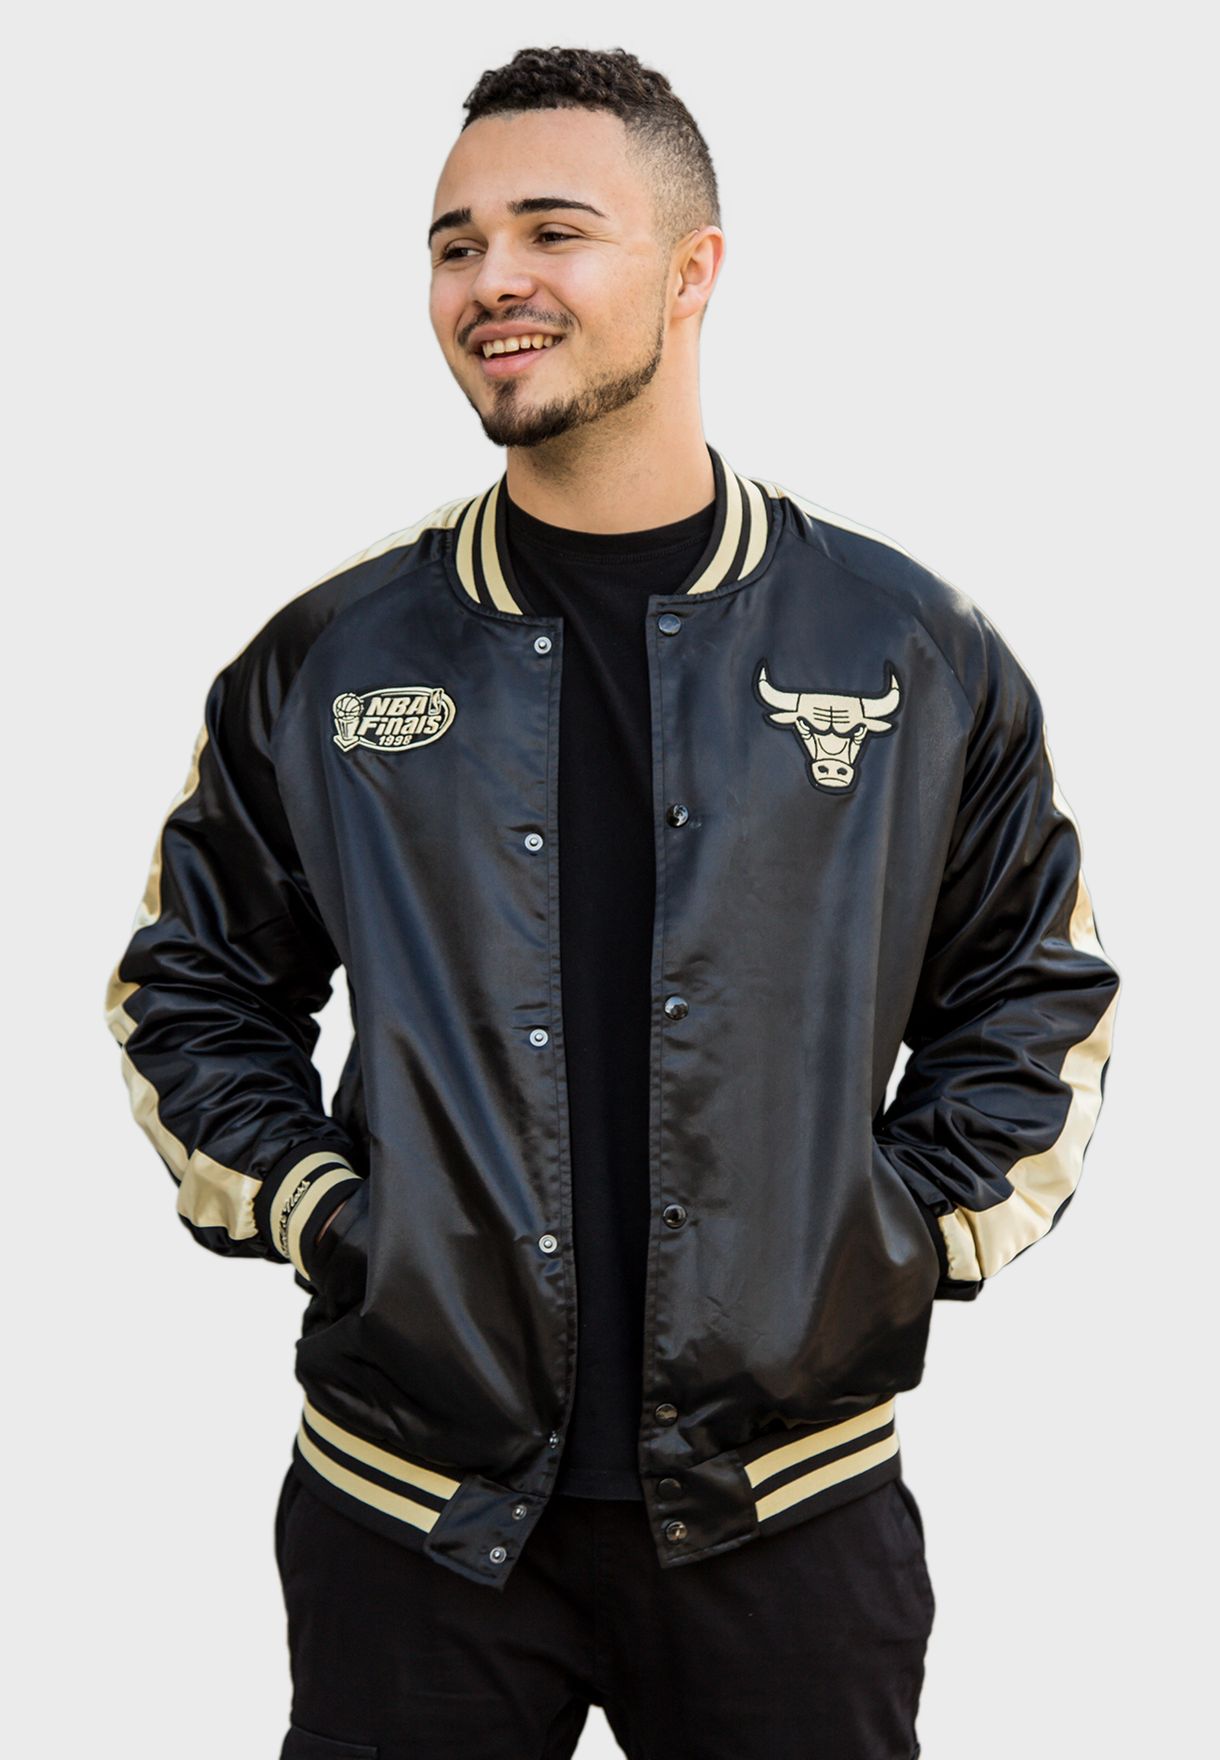 chicago bulls track jacket